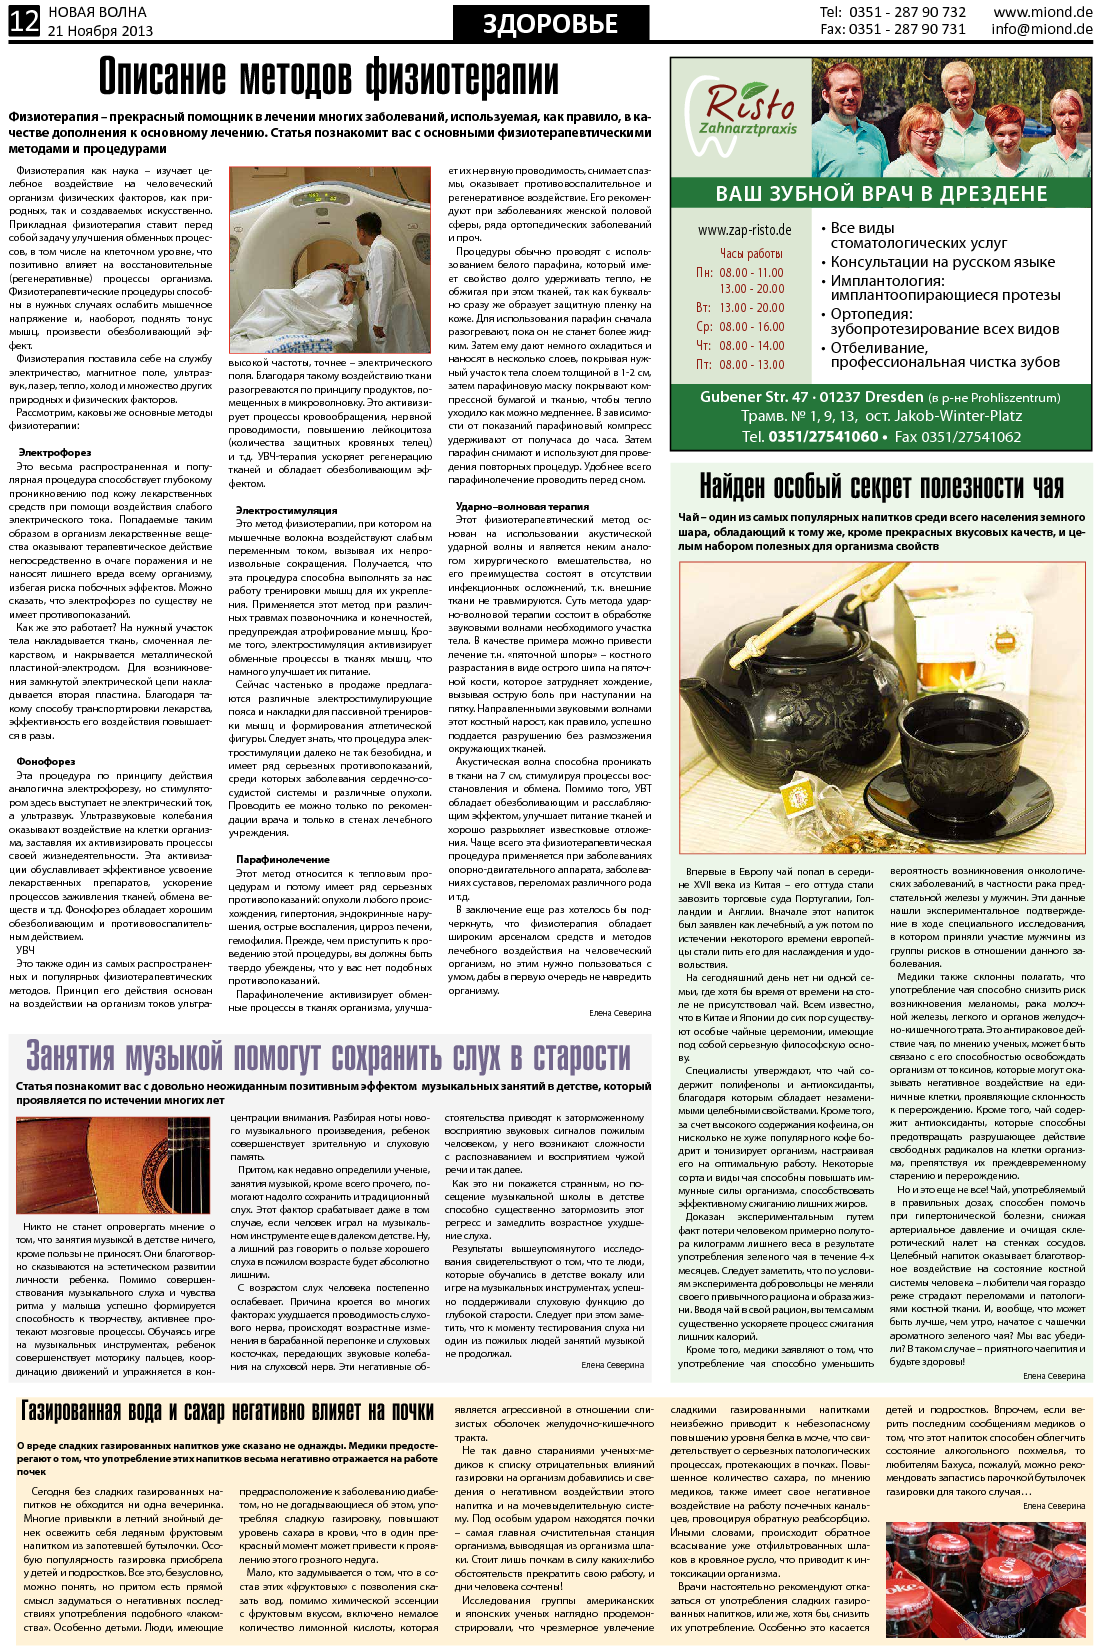 Новая Wолна (газета). 2013 год, номер 47, стр. 12